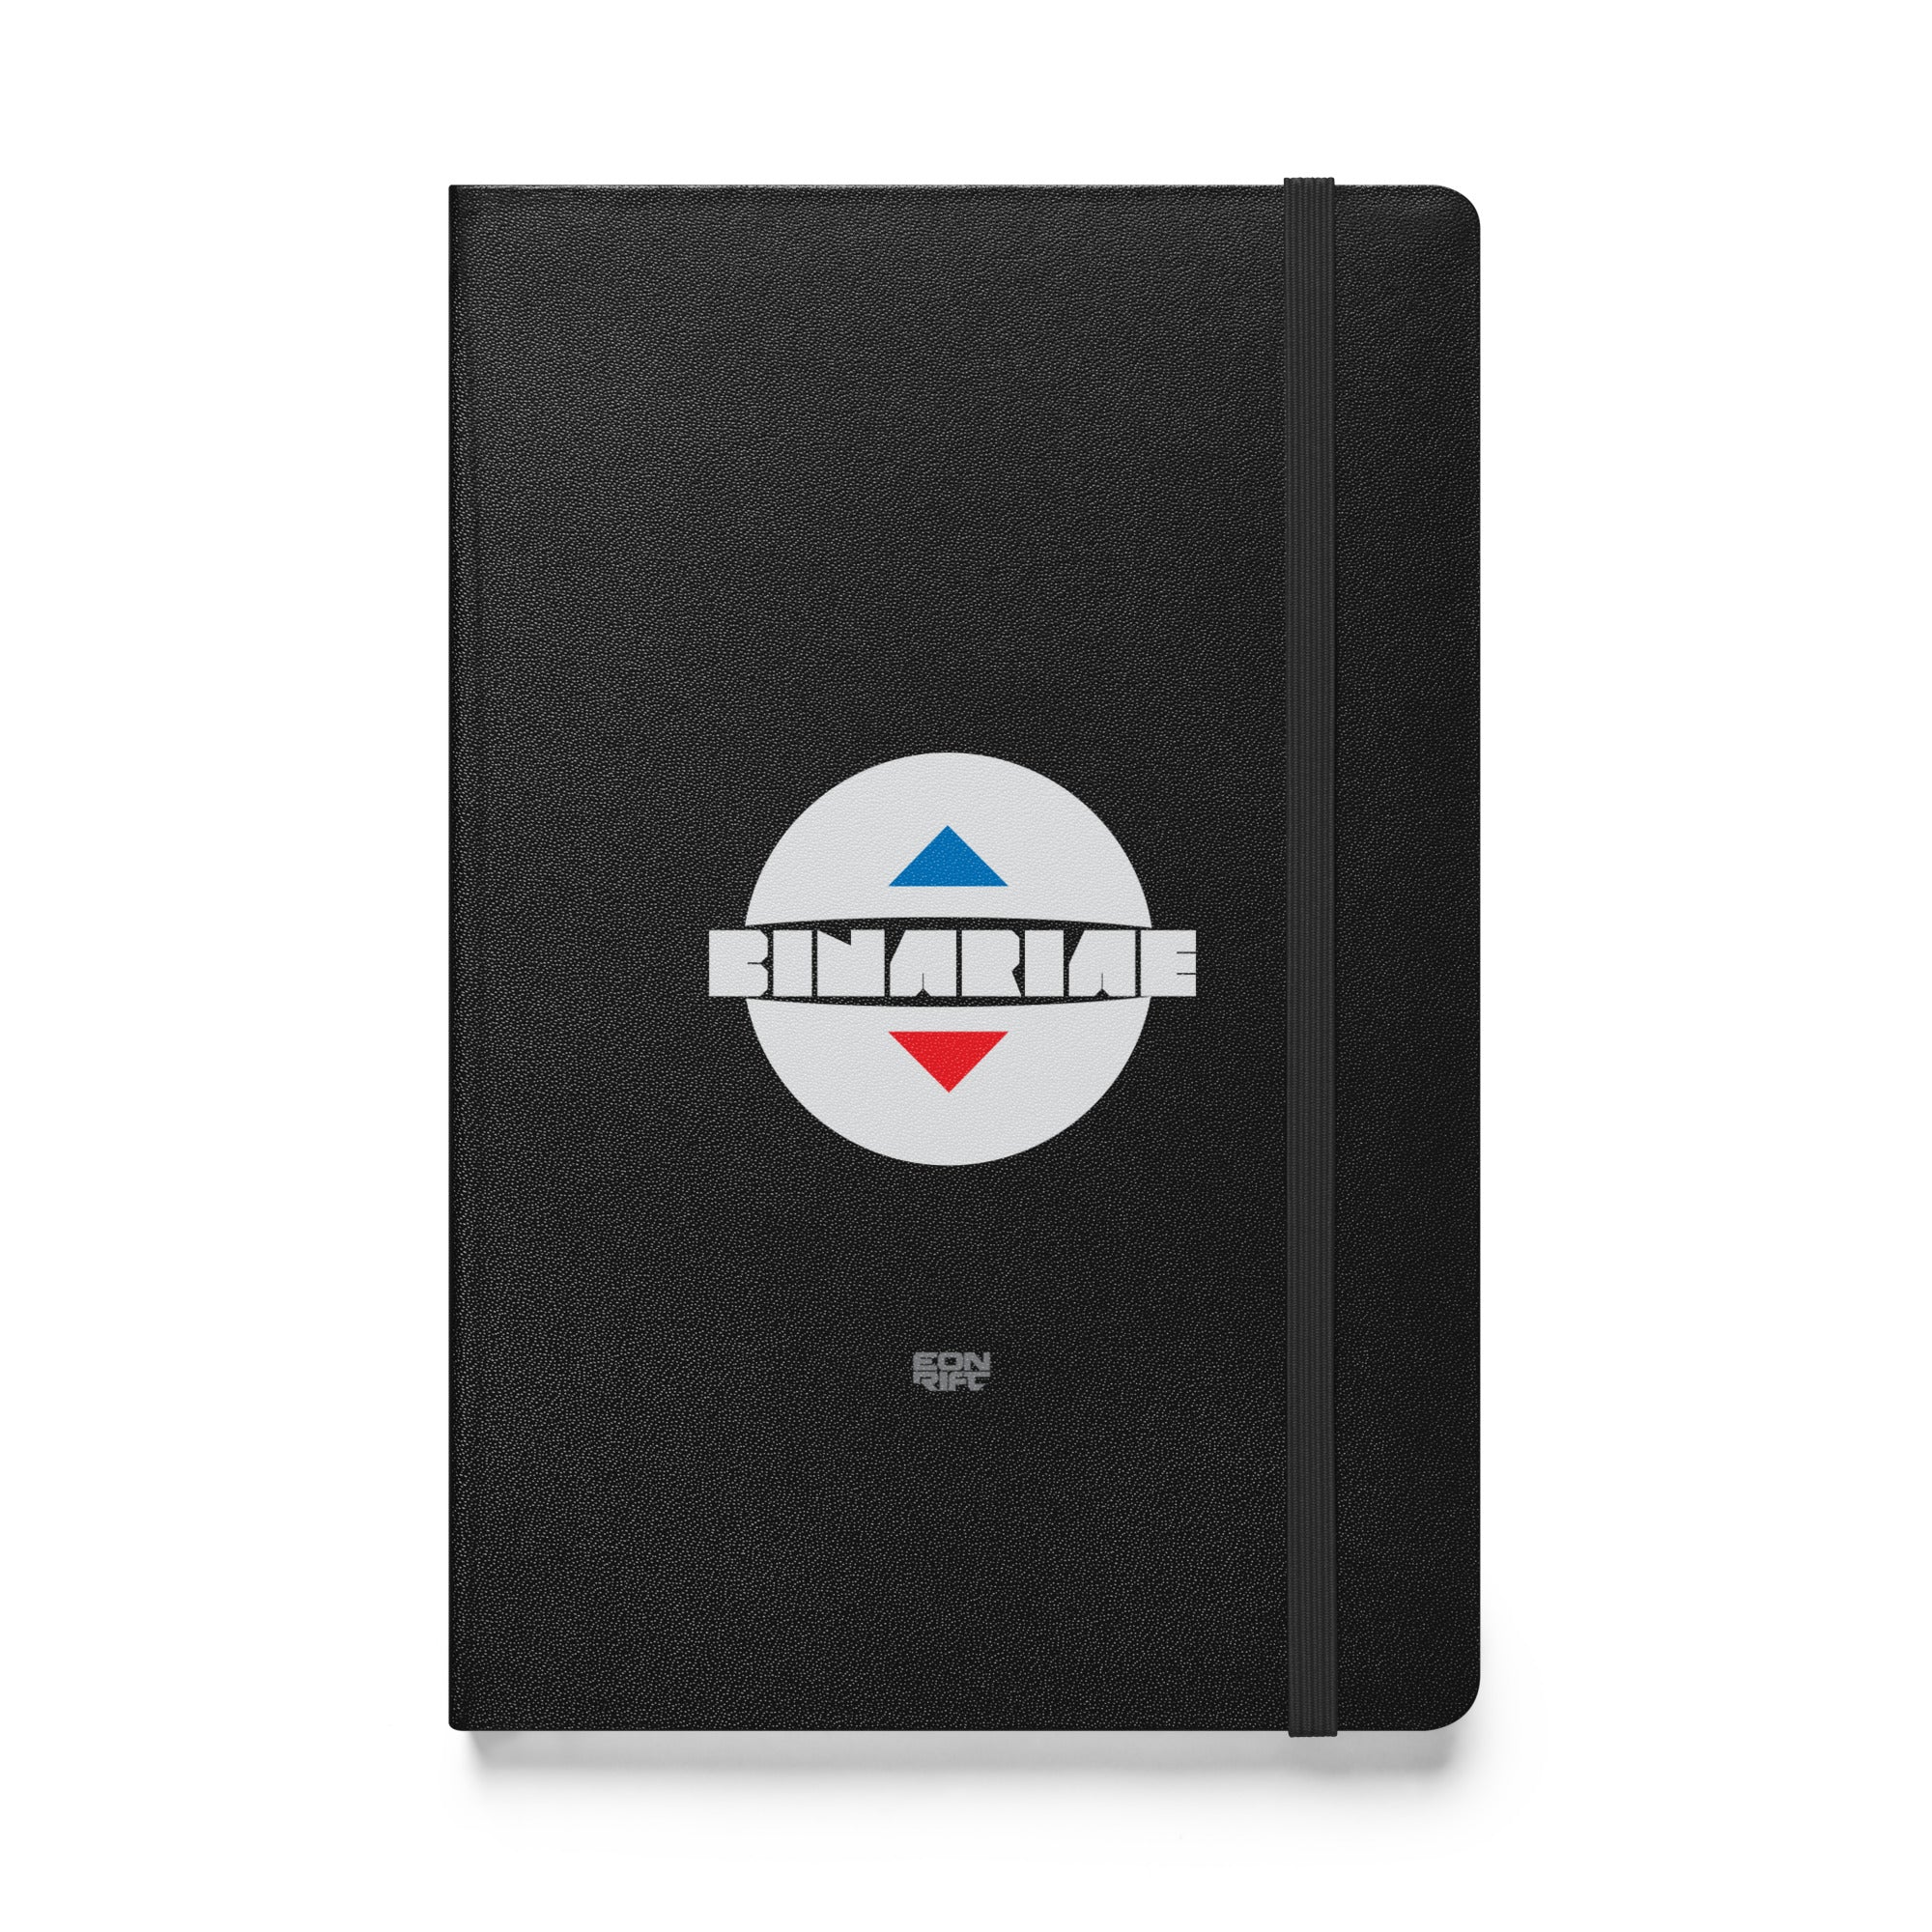 BINARIAE | Hardcover bound notebook